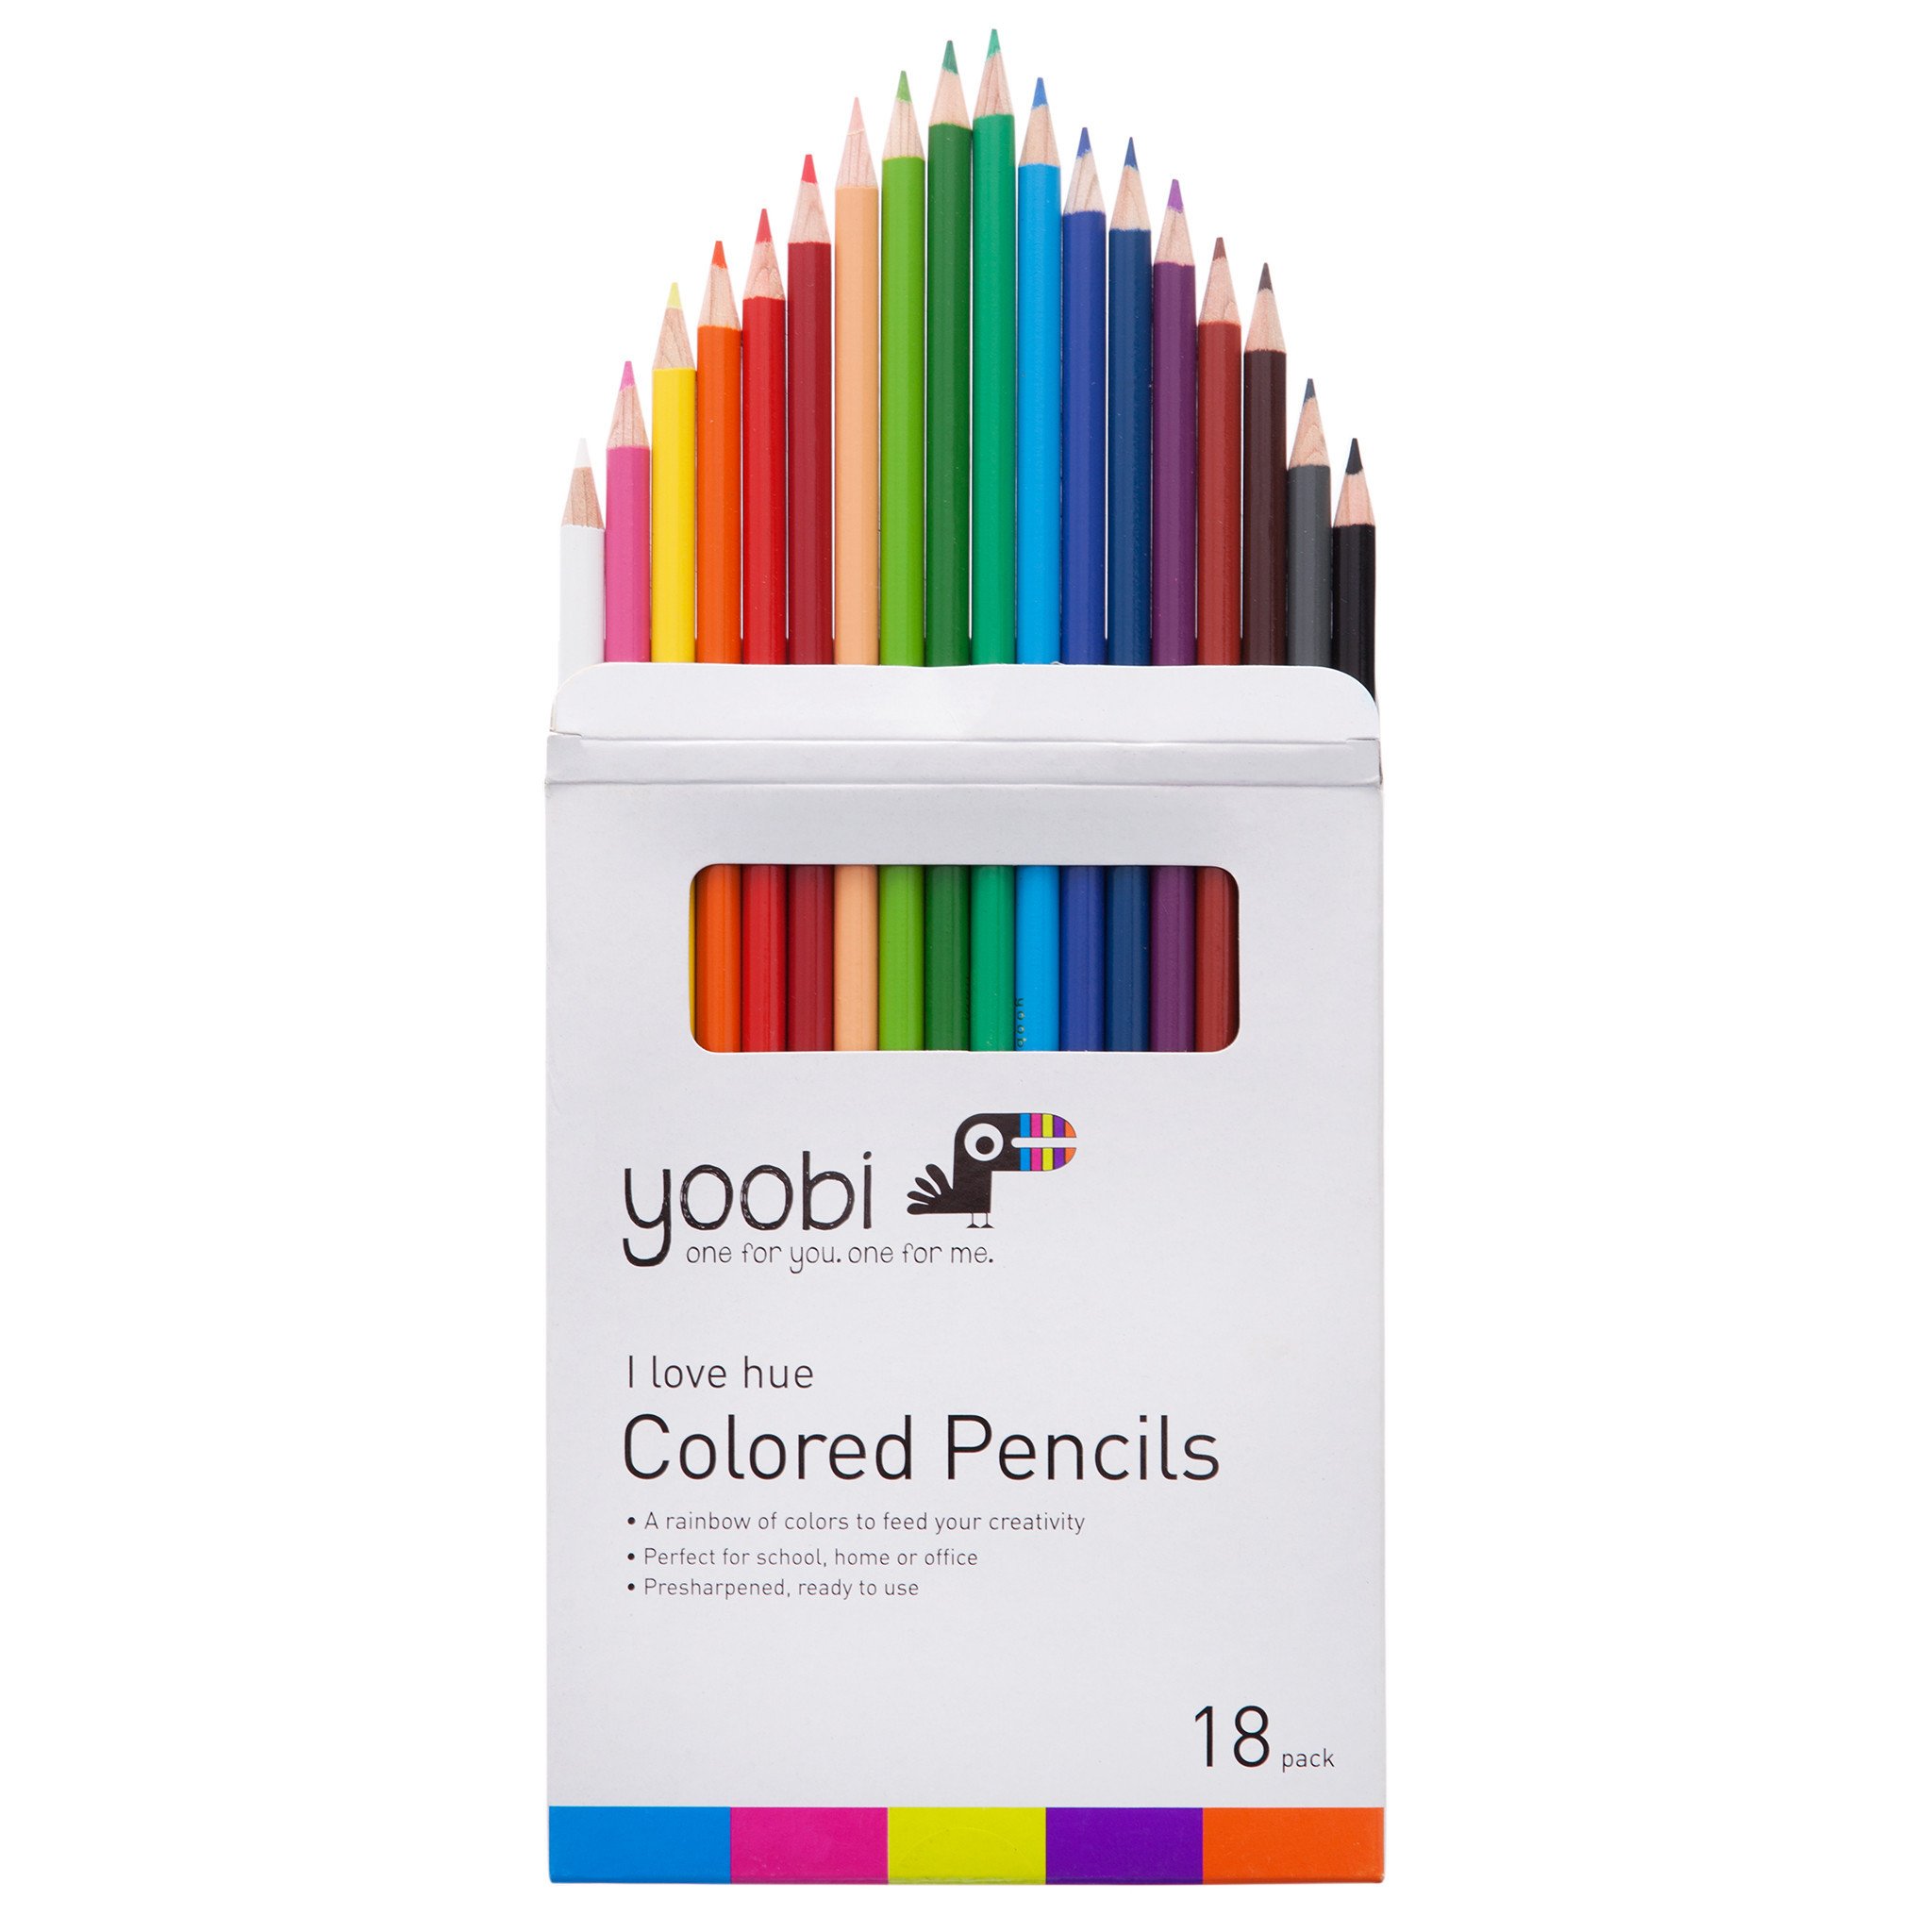 Color pencils photo